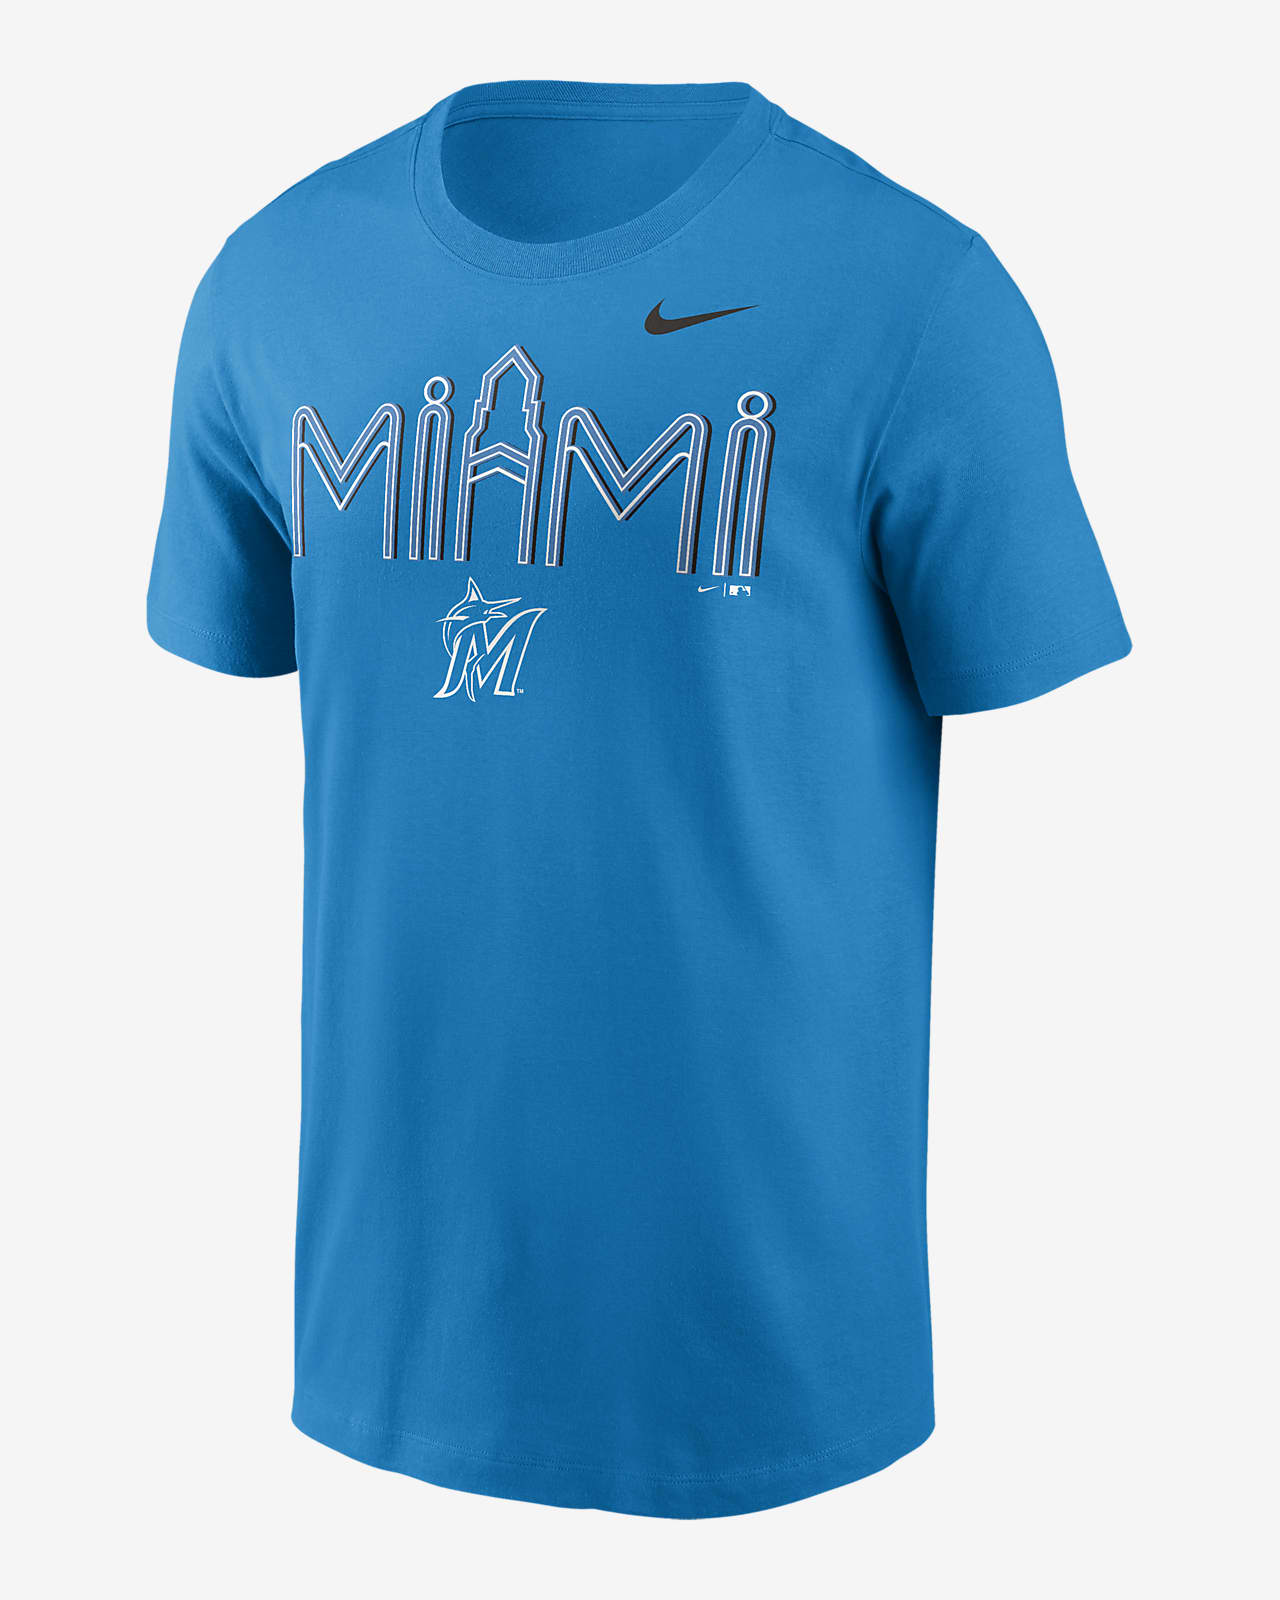 Nike Men's T-Shirt - White - M